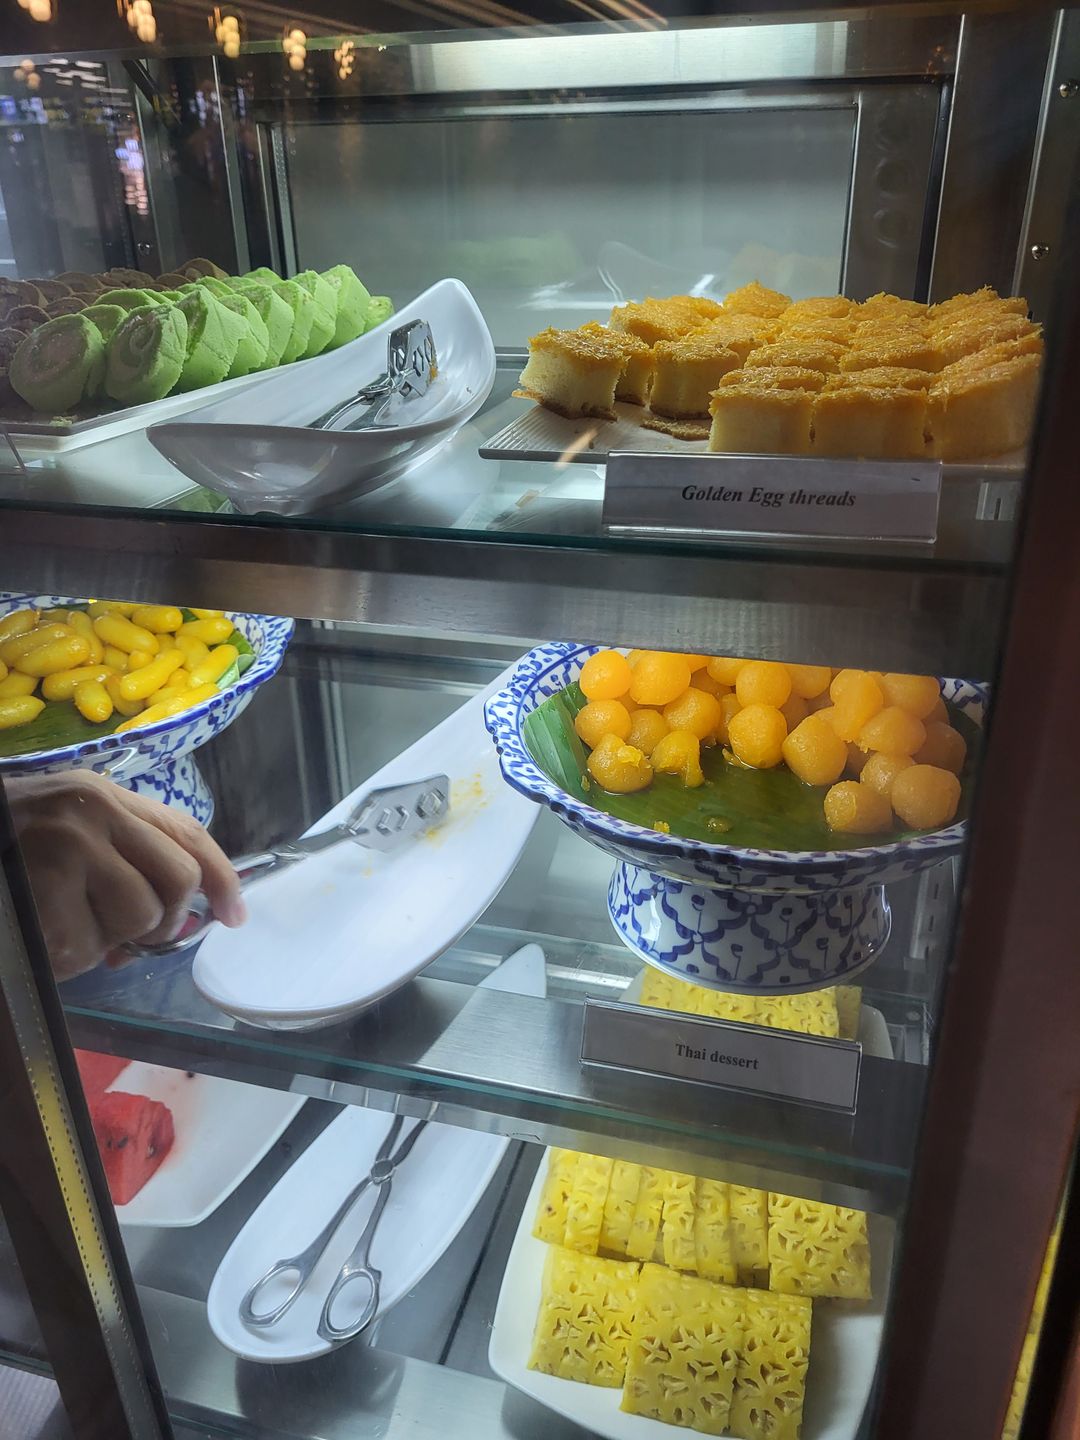 &nbsp; 我們在曼谷轉機所以就拿門檻最低JCB卡去機場貴賓室吃吃喝喝，我特喜歡蛋黃醬配火雞肉，就是甜點都不是很合我的胃口~哈哈&nbsp;&nbsp;